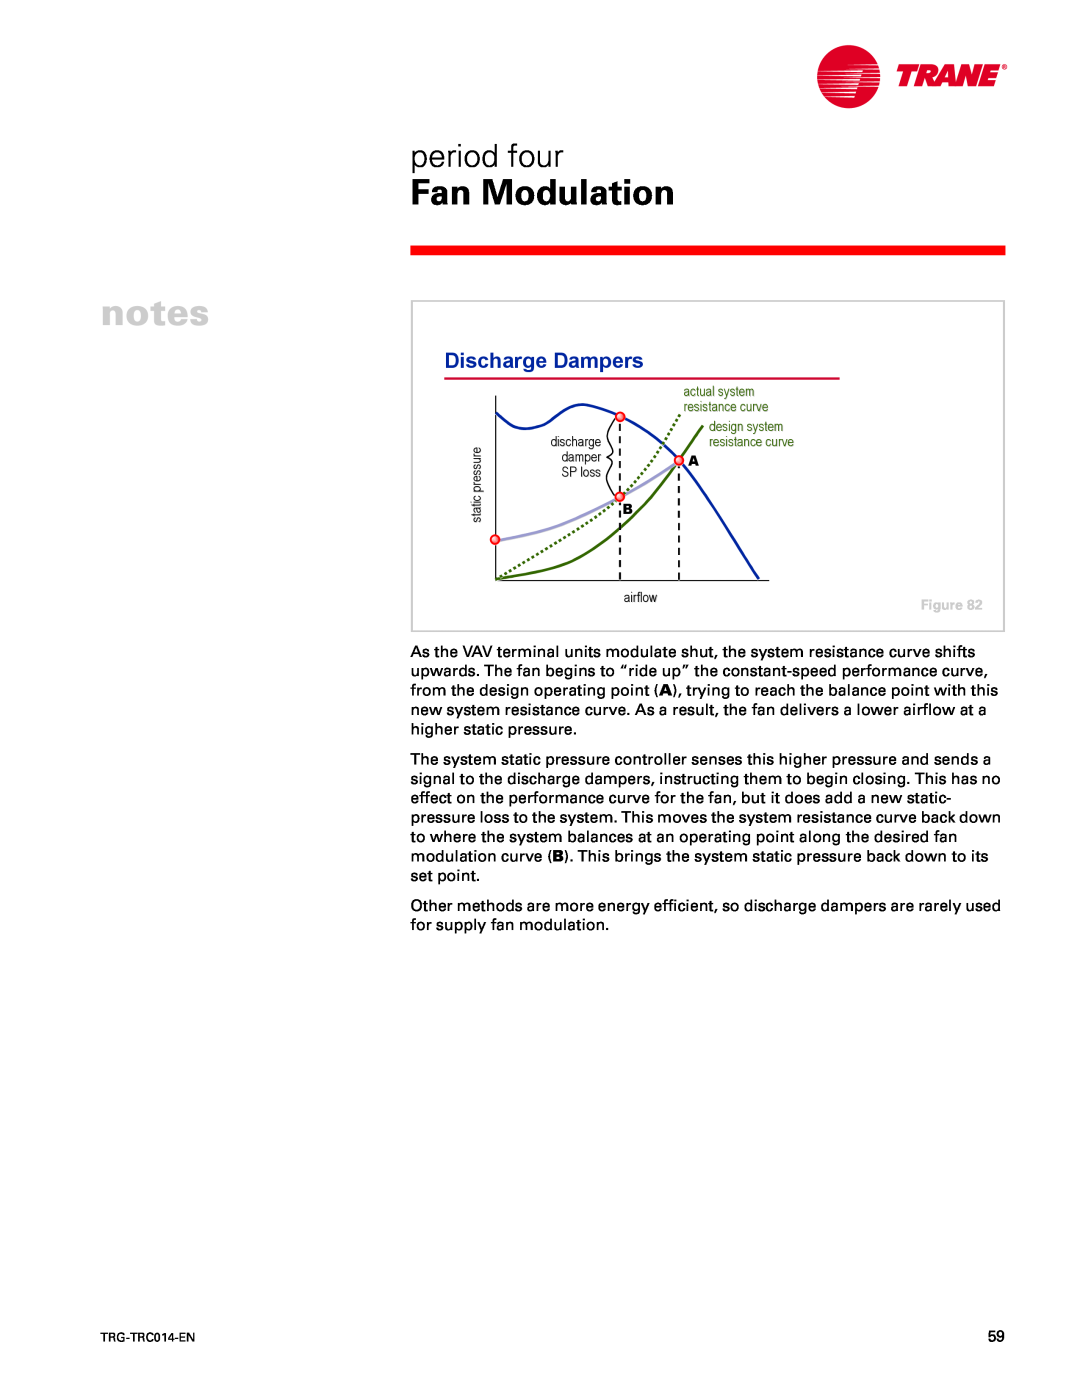 Trane TRG-TRC014-EN manual Fan Modulation, period four, Discharge Dampers 